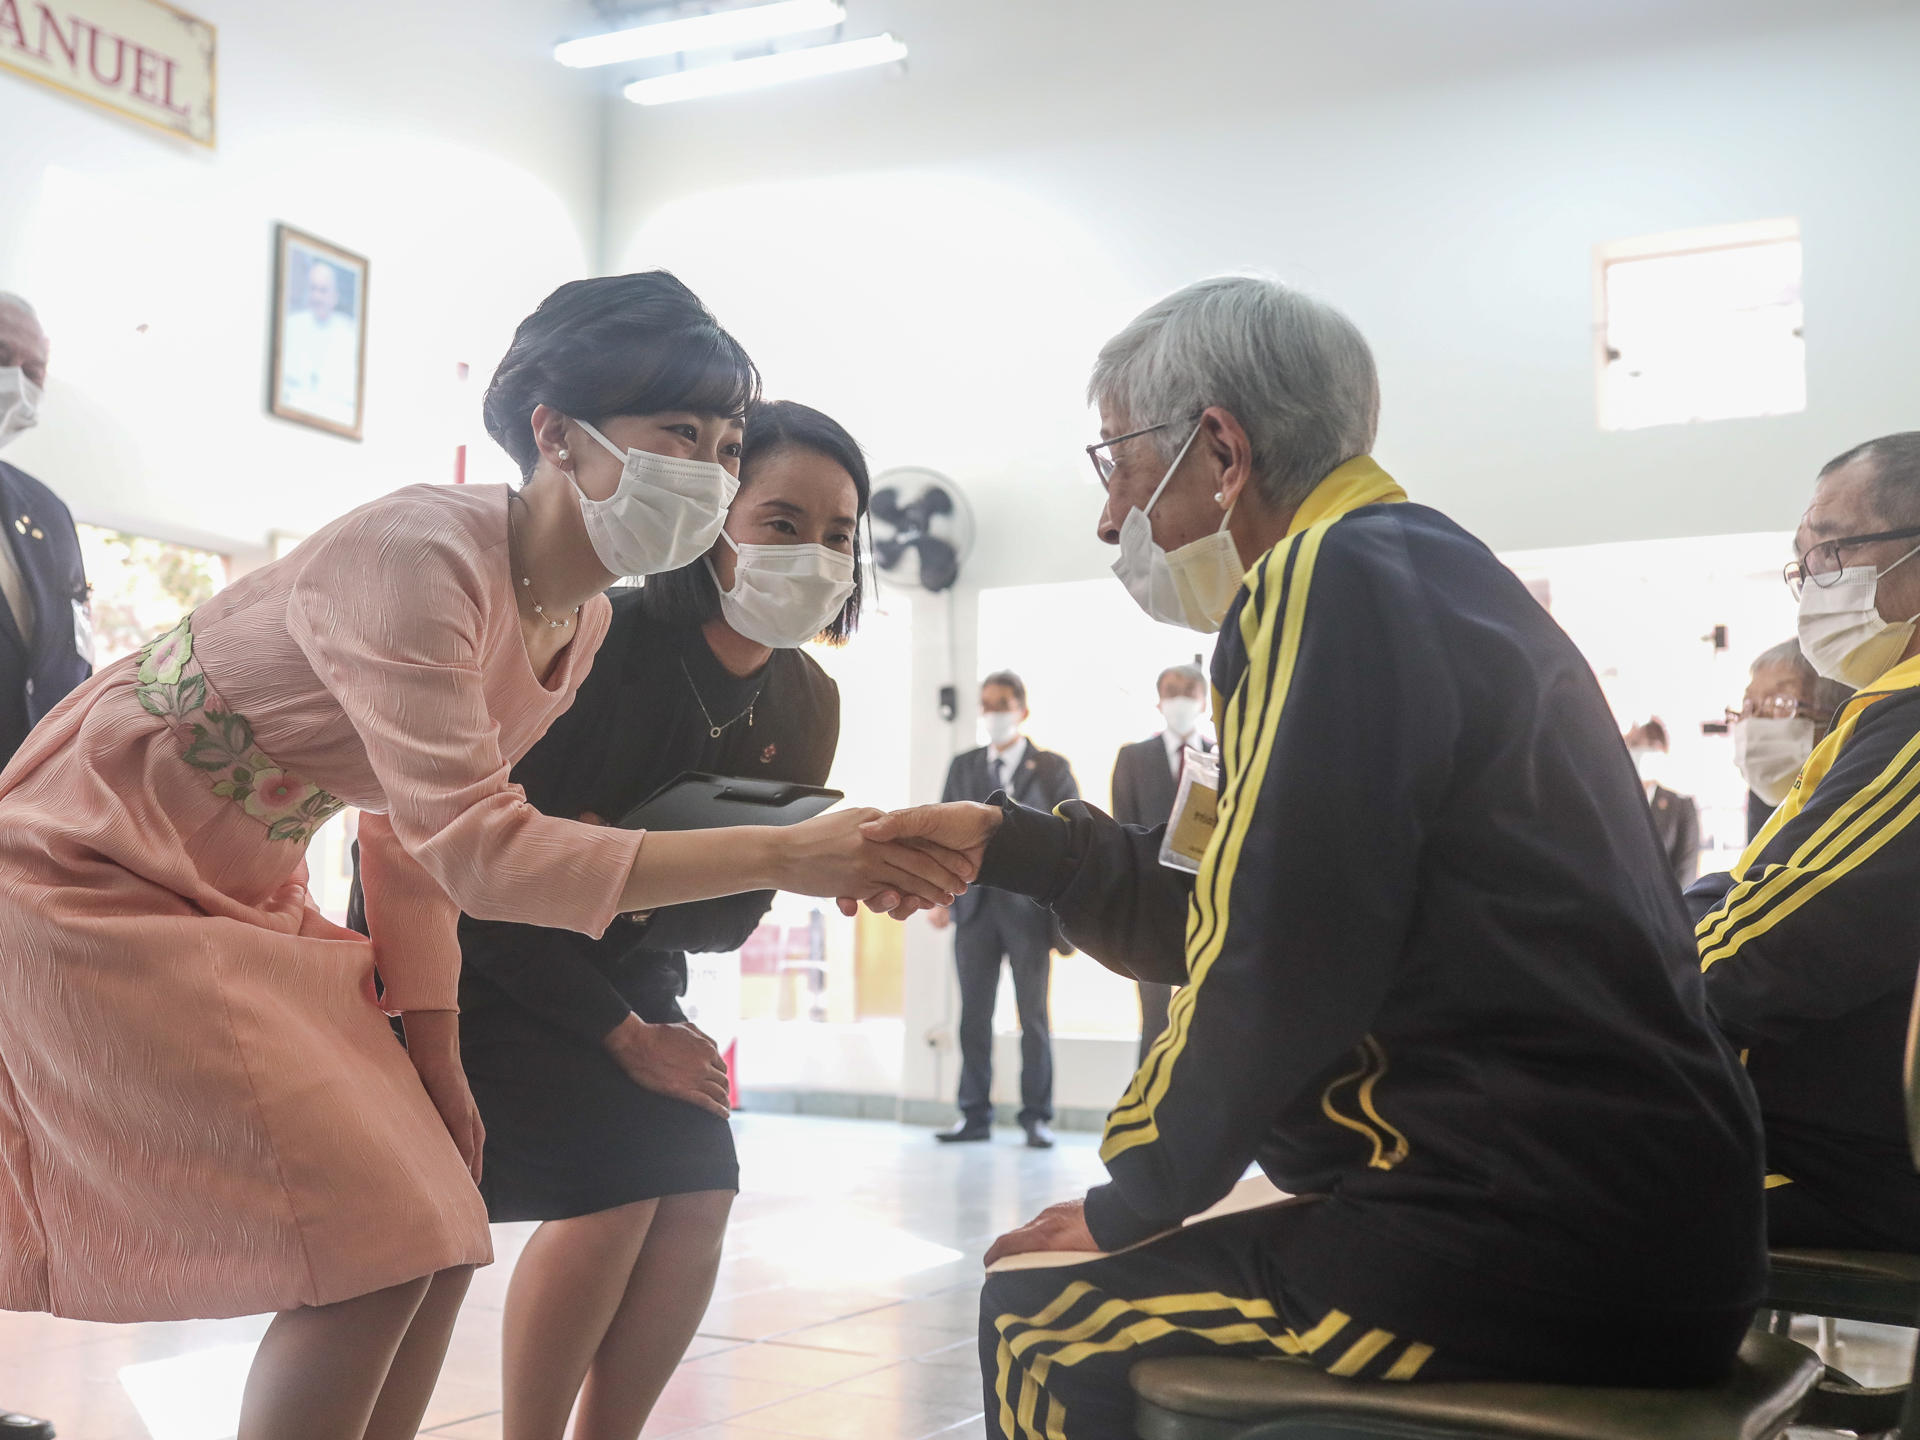 Princess Kako visits the Emmanuel Peruano Japones Ventanilla Policlinic, in Lima, Peru, 3 November 2023. EFE/ Aldair Mejia
